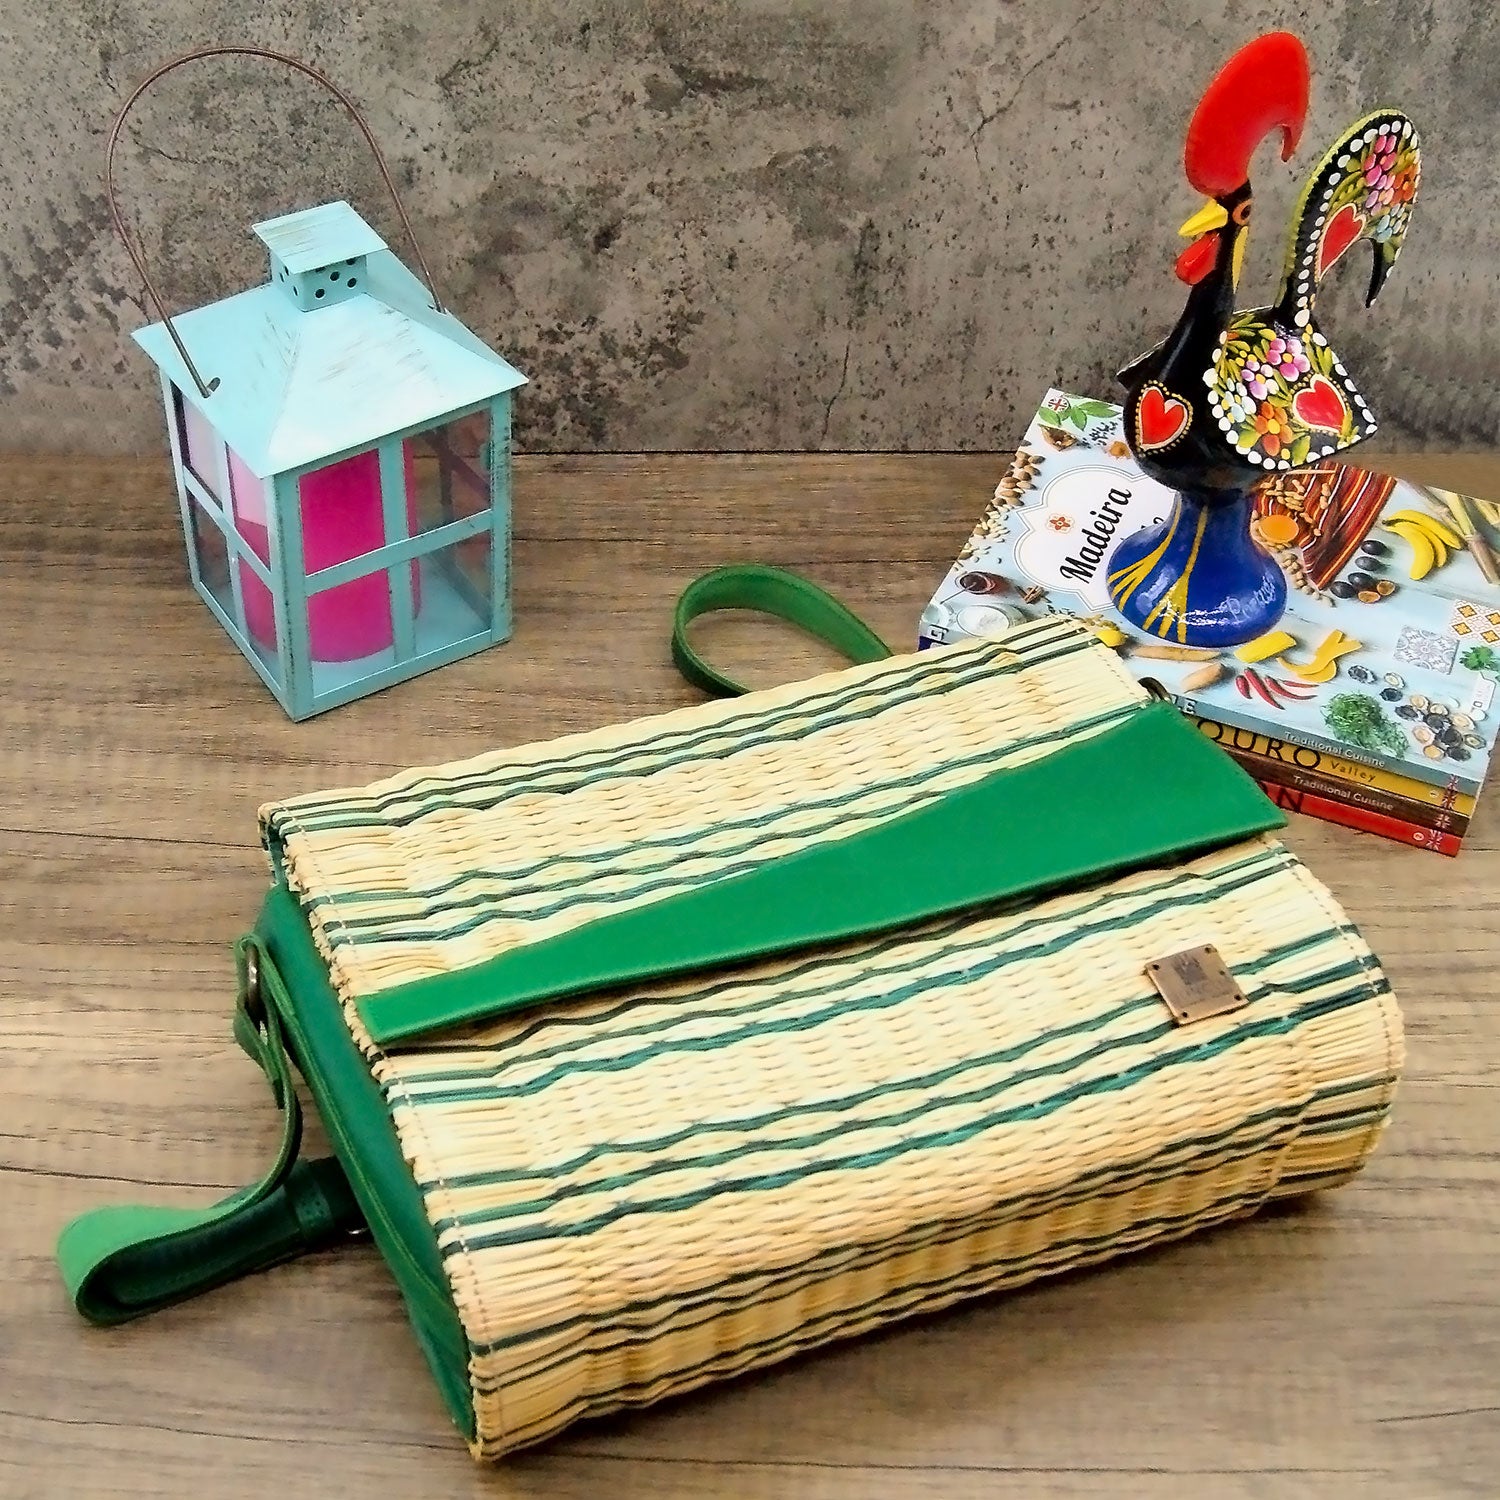 Handmade Wicker Vegan Straw Basket Bag for Women Made in Portugal